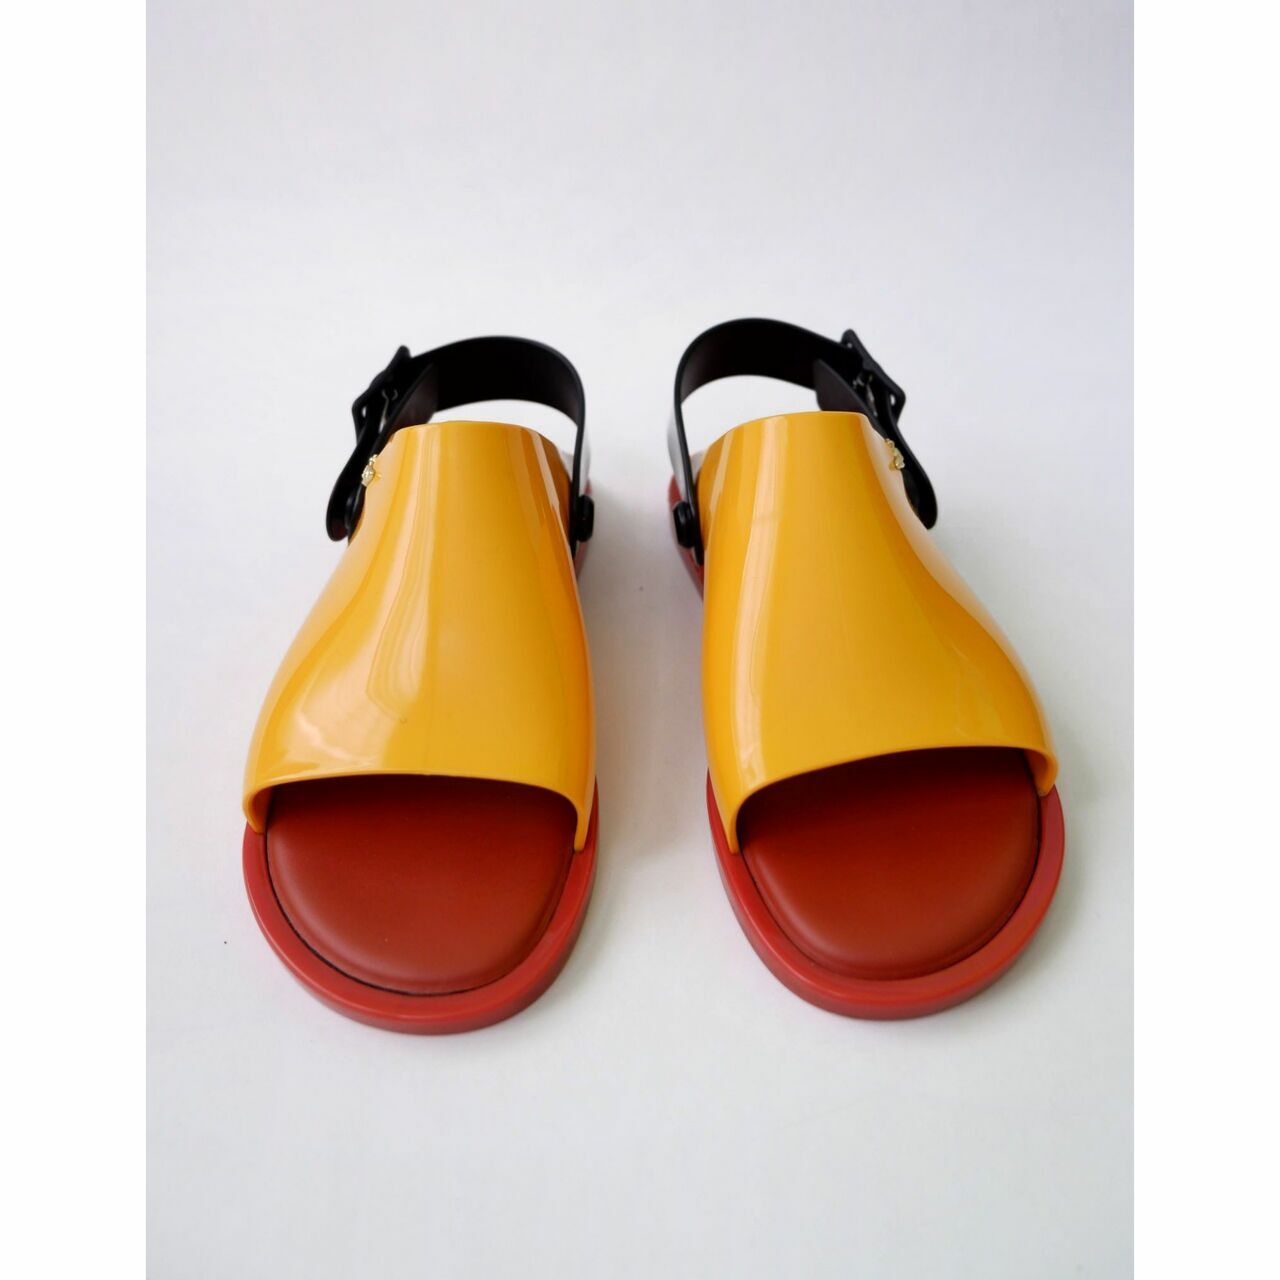 Melissa X Viviene Westwood Anglo Mania  Black & Yellow Sandals